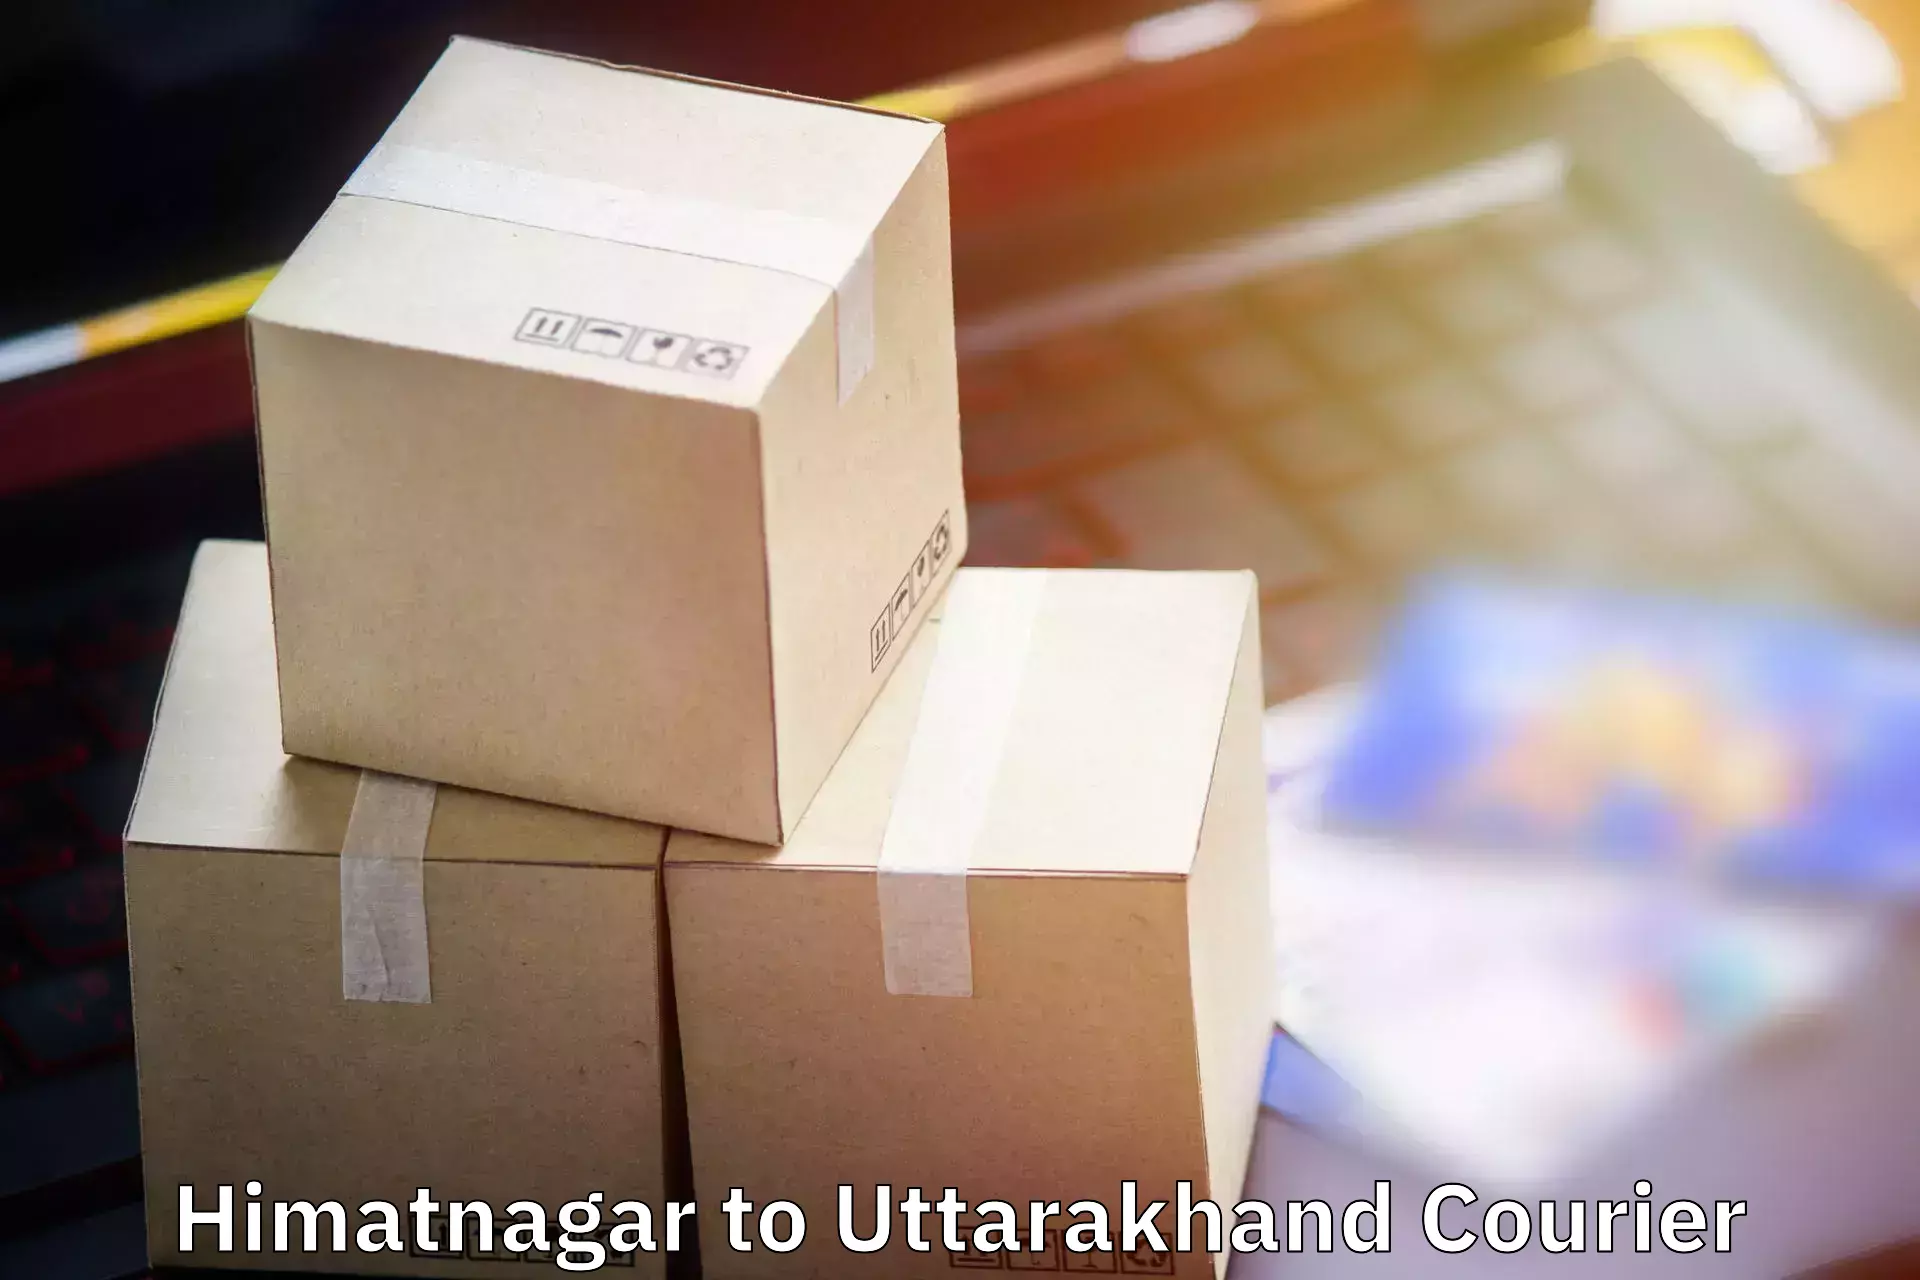 Baggage transport network Himatnagar to Paithani